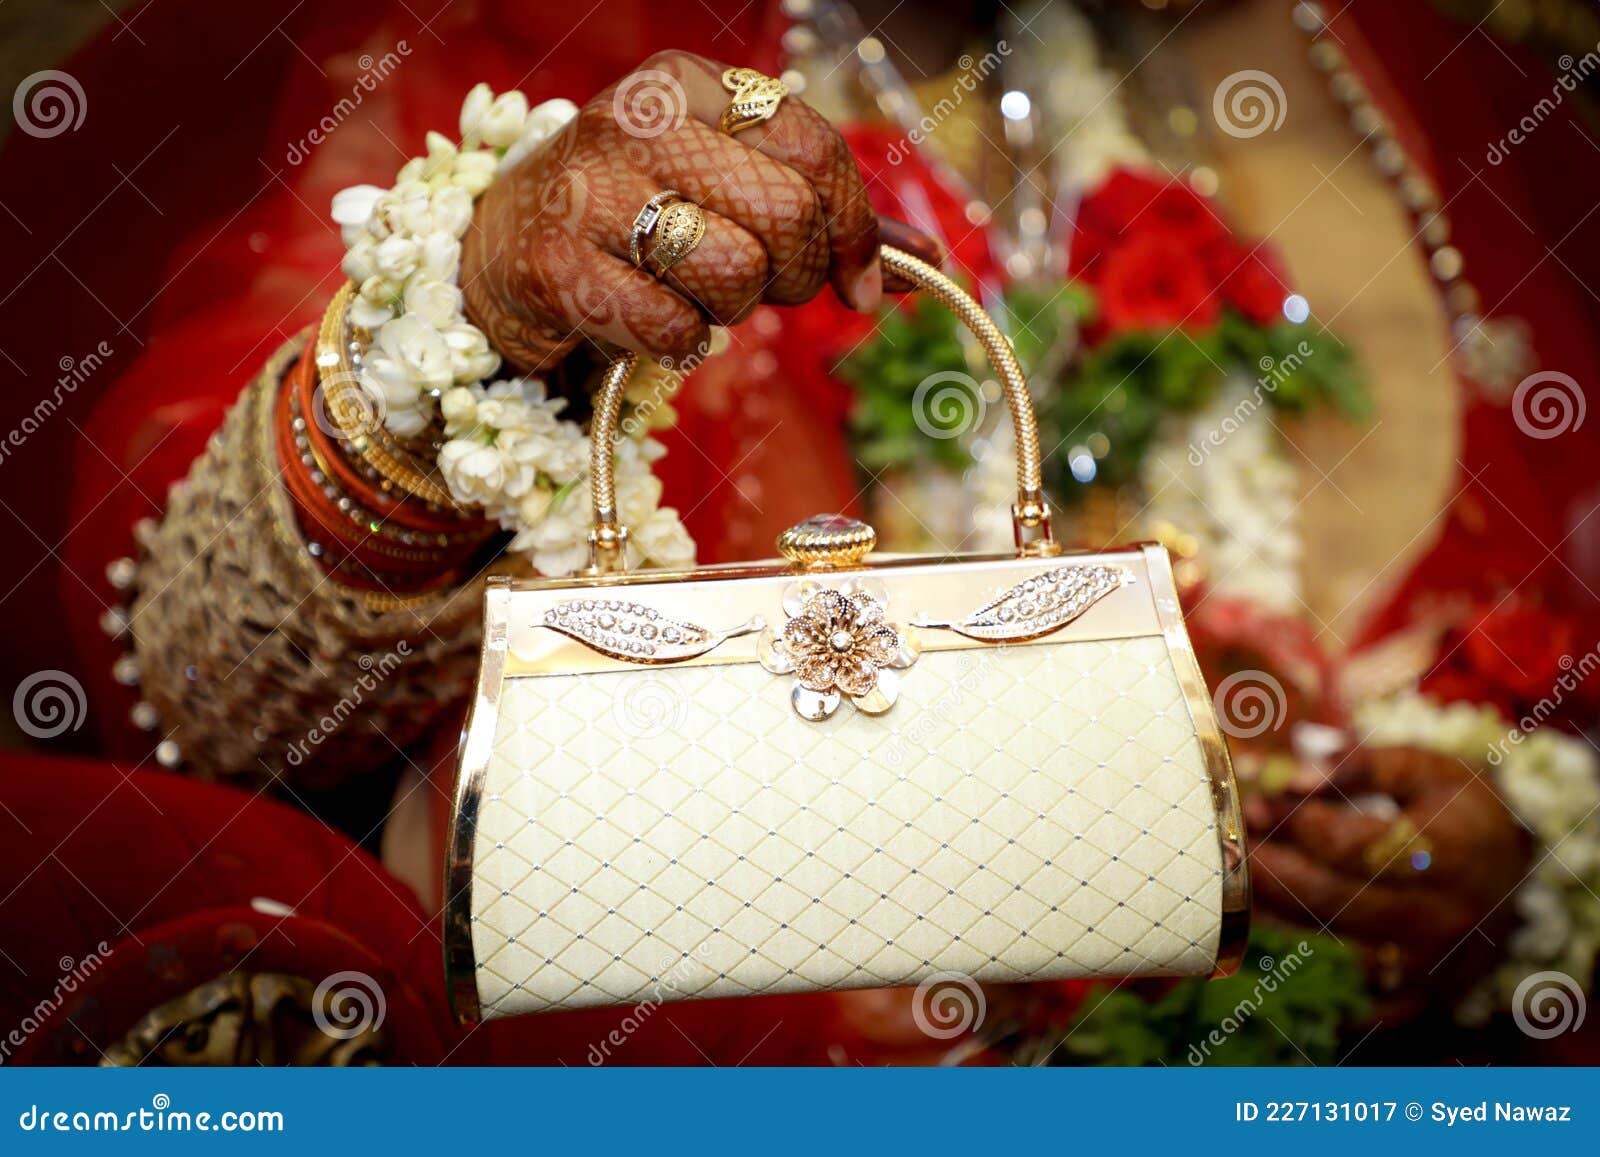 fcity.in - The Happy Handbag White Clutch Pearl Purses For Women Handbag  Bridal